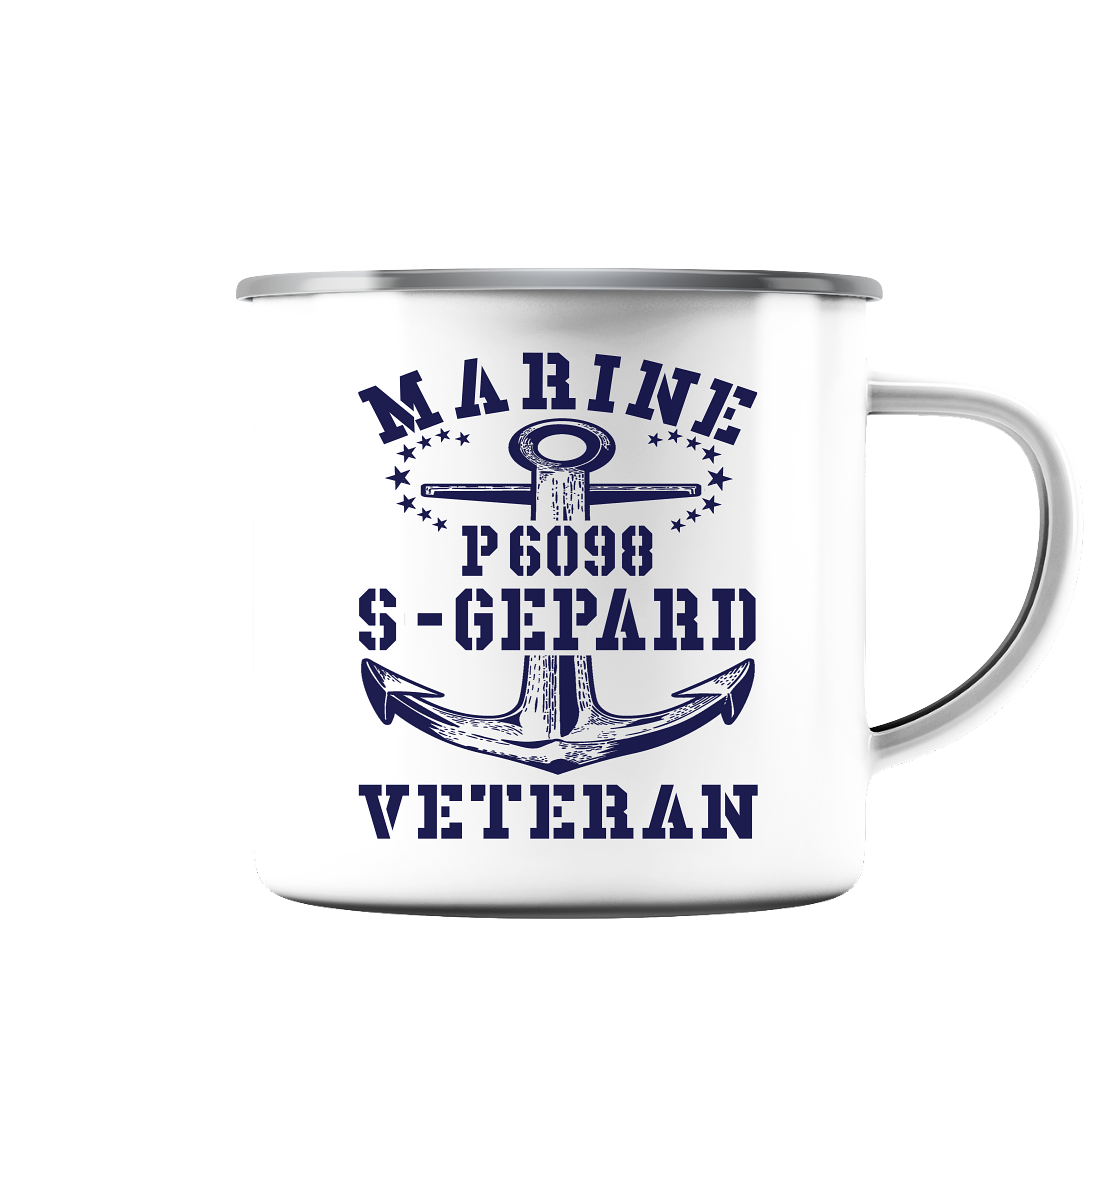 P6098 S-GEPARD Marine Veteran - Emaille Tasse (Silber)